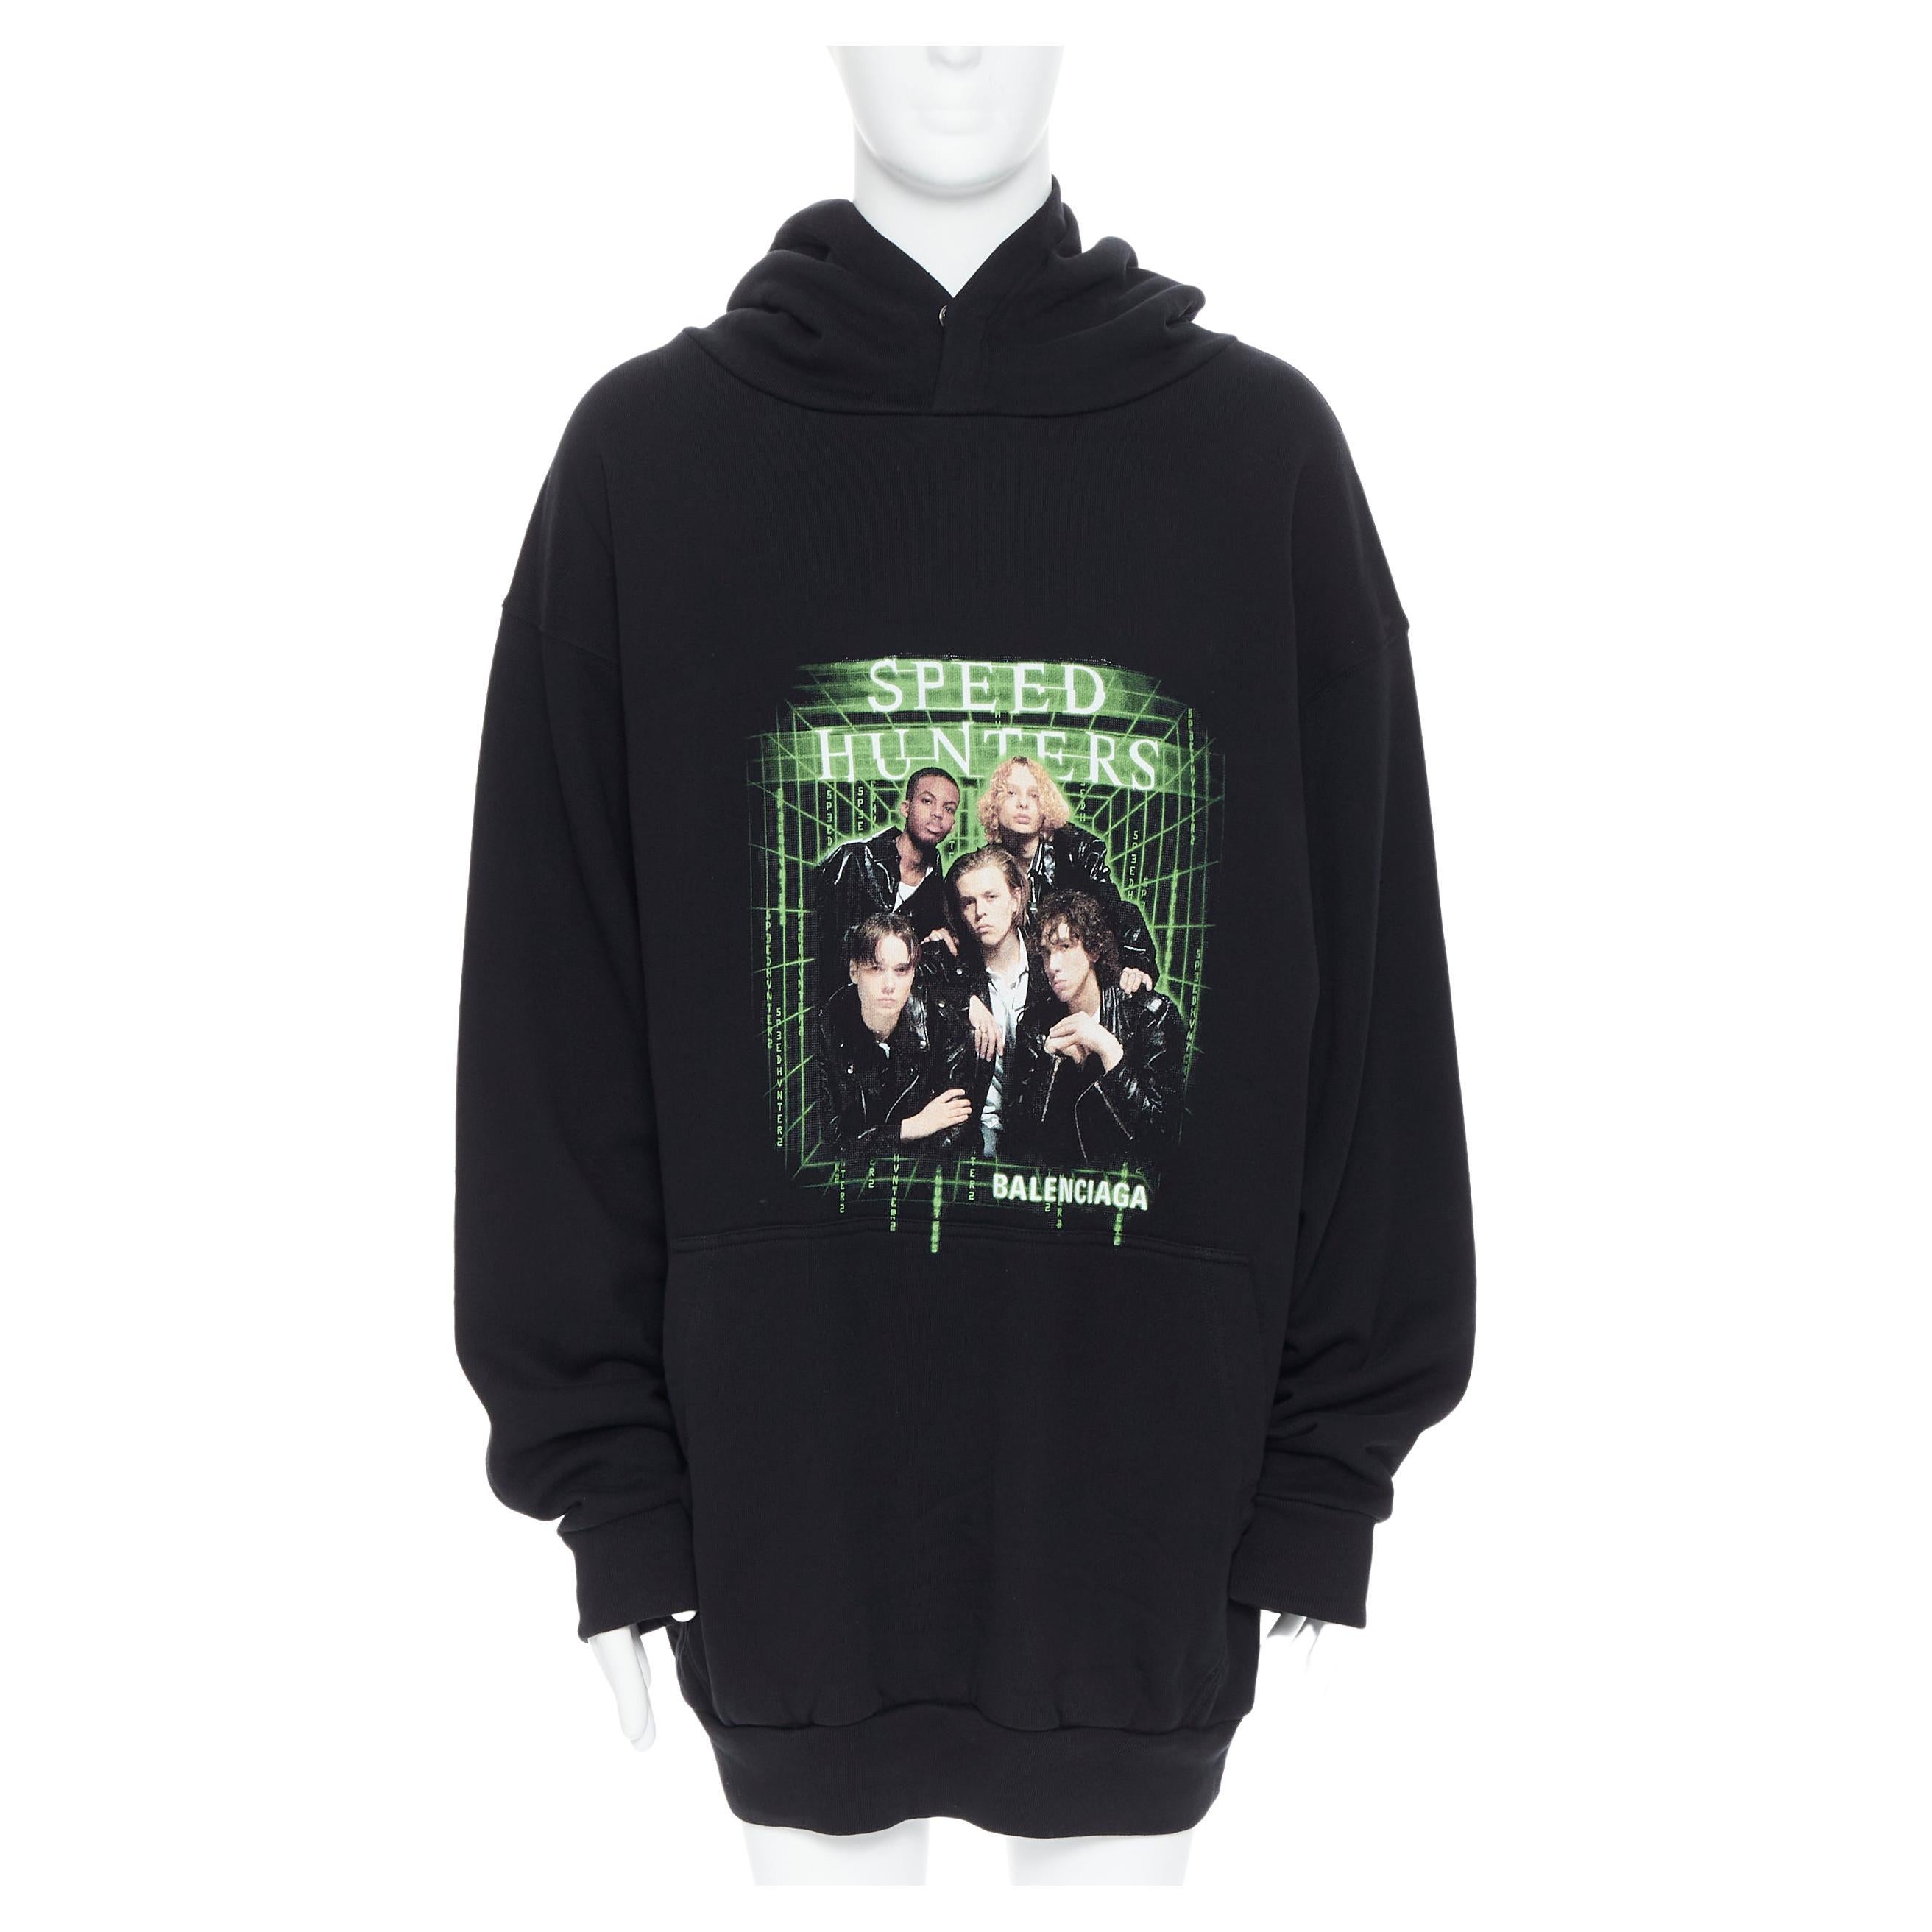 new BALENCIAGA 2019 Speed Hunters Matrix boy band oversized fleece hoodie L